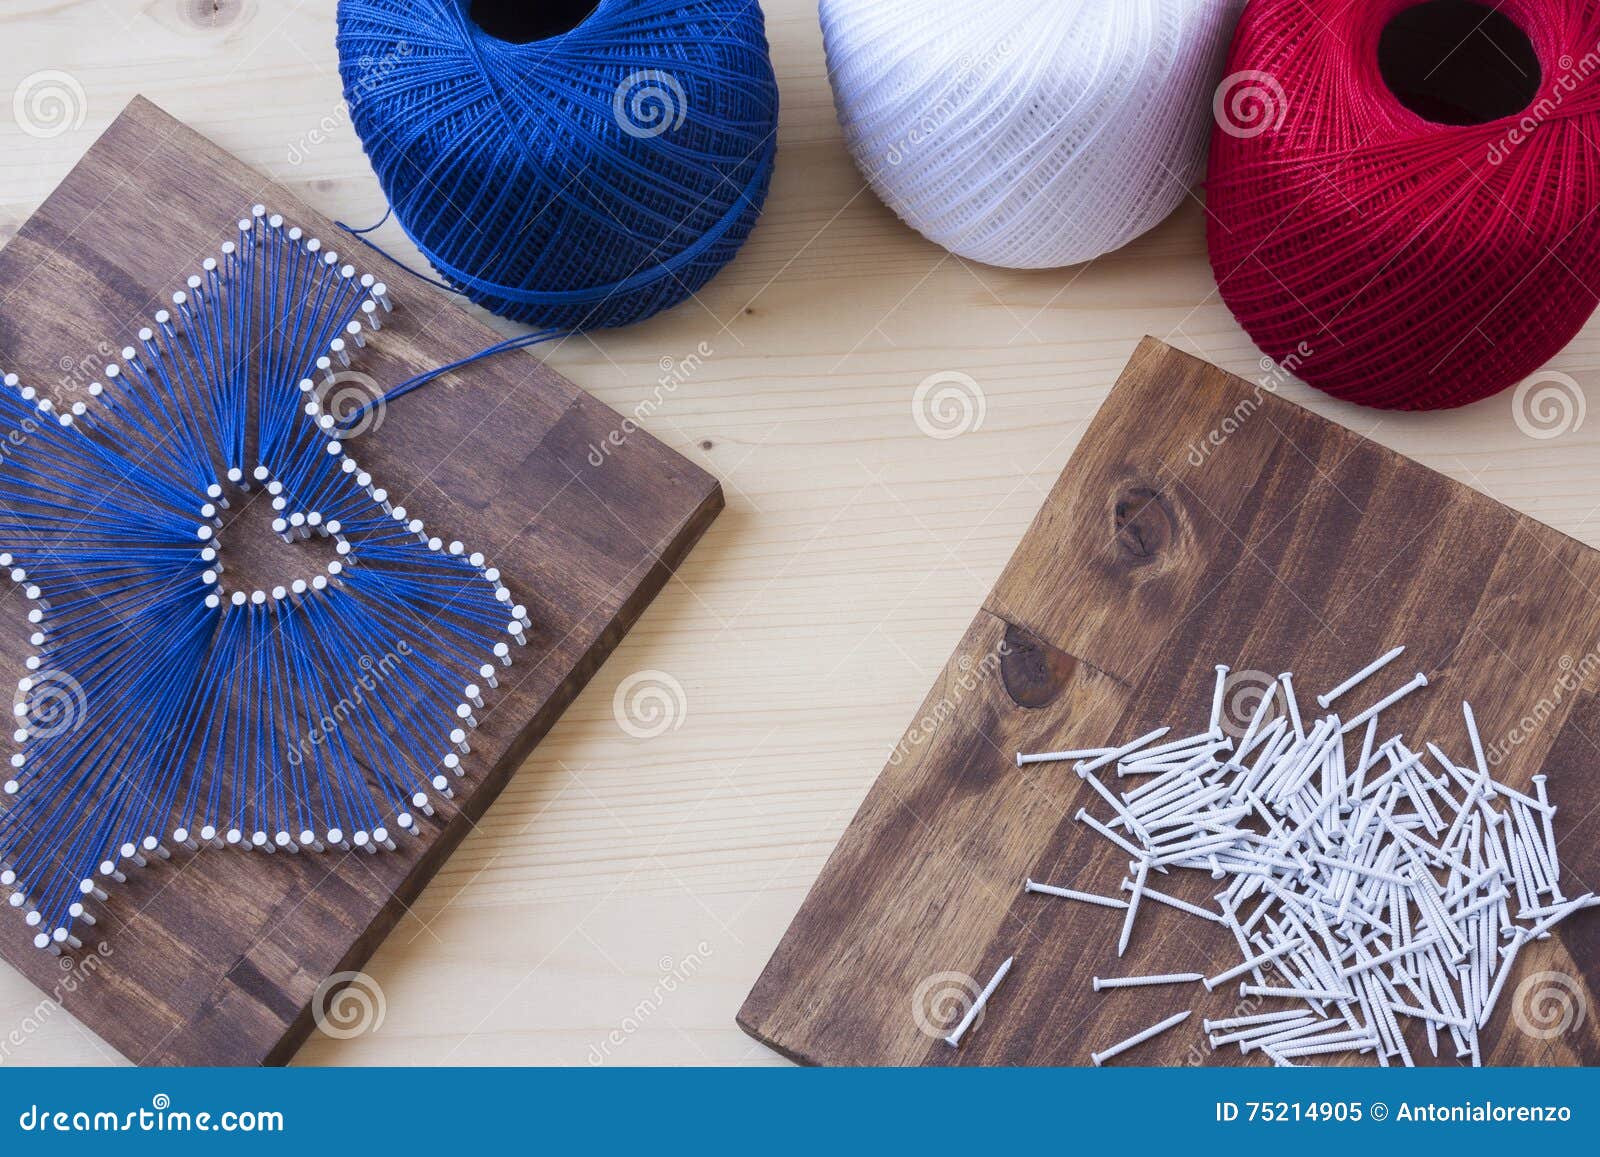 Texas State String Art stock image. Image of yarn, wood - 75214905